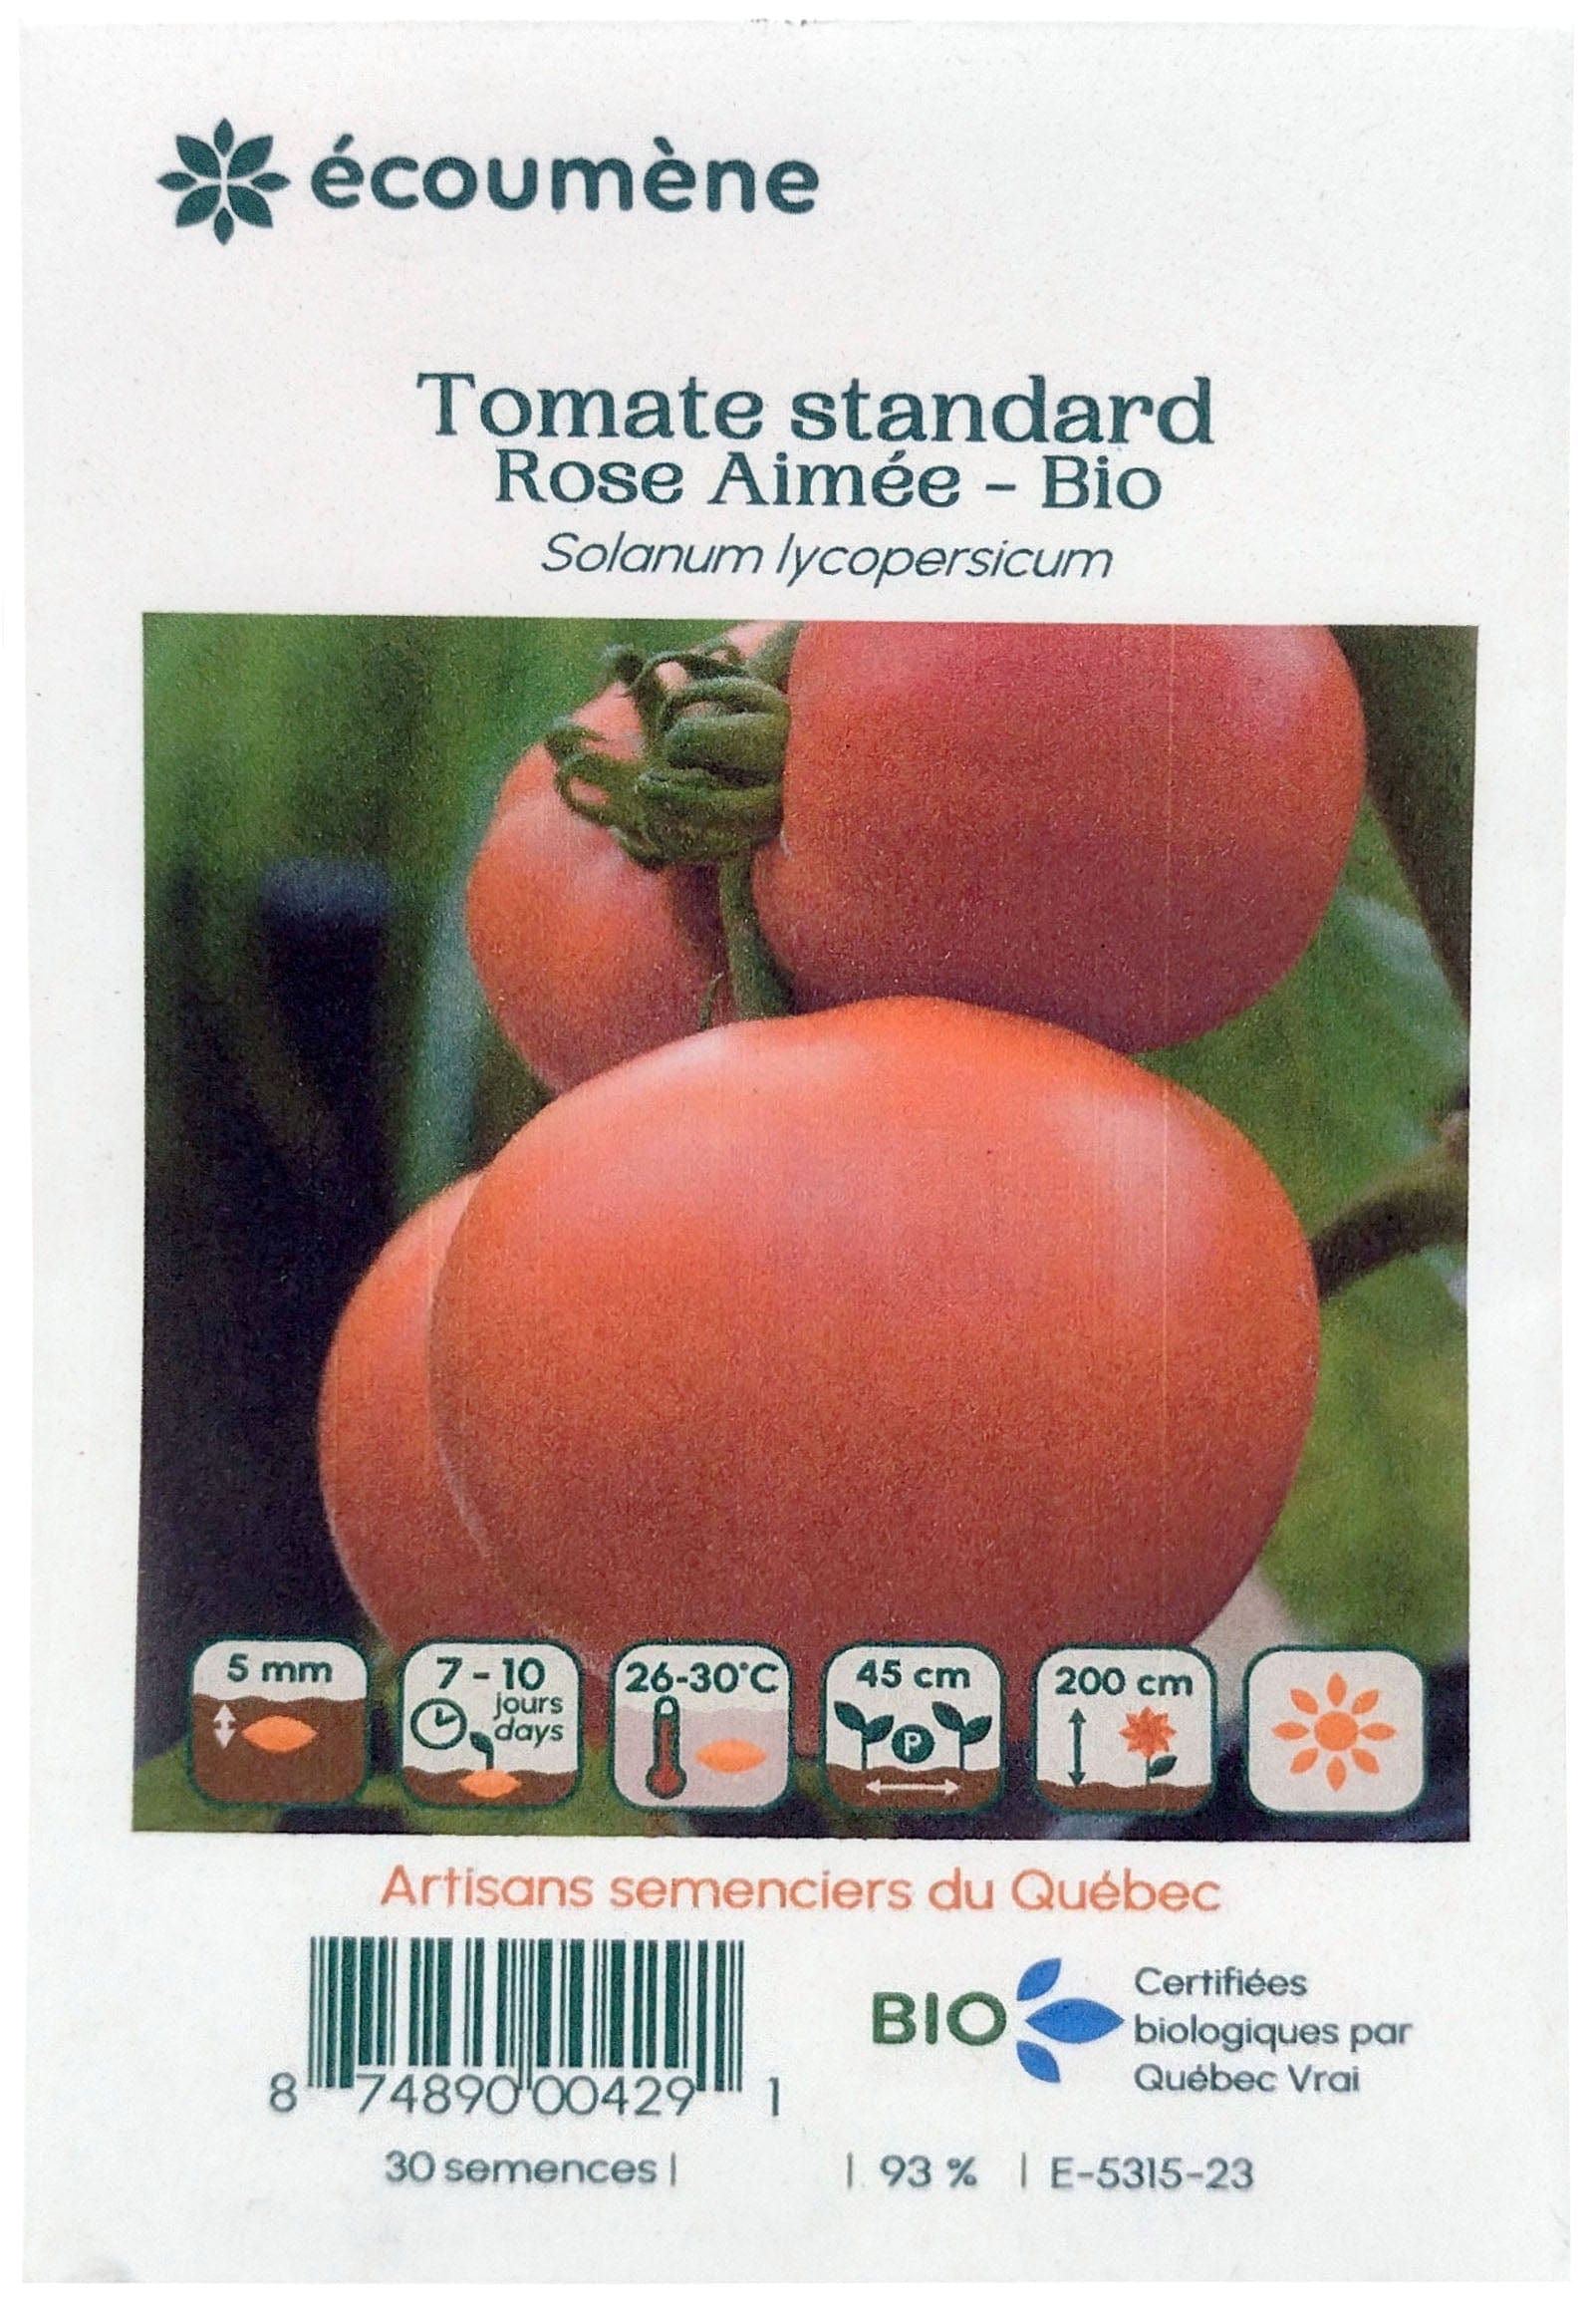 JARDINS DE L'ÉCOUMÈNE Épicerie Semence tomate standard Rose Aimée bio (un)